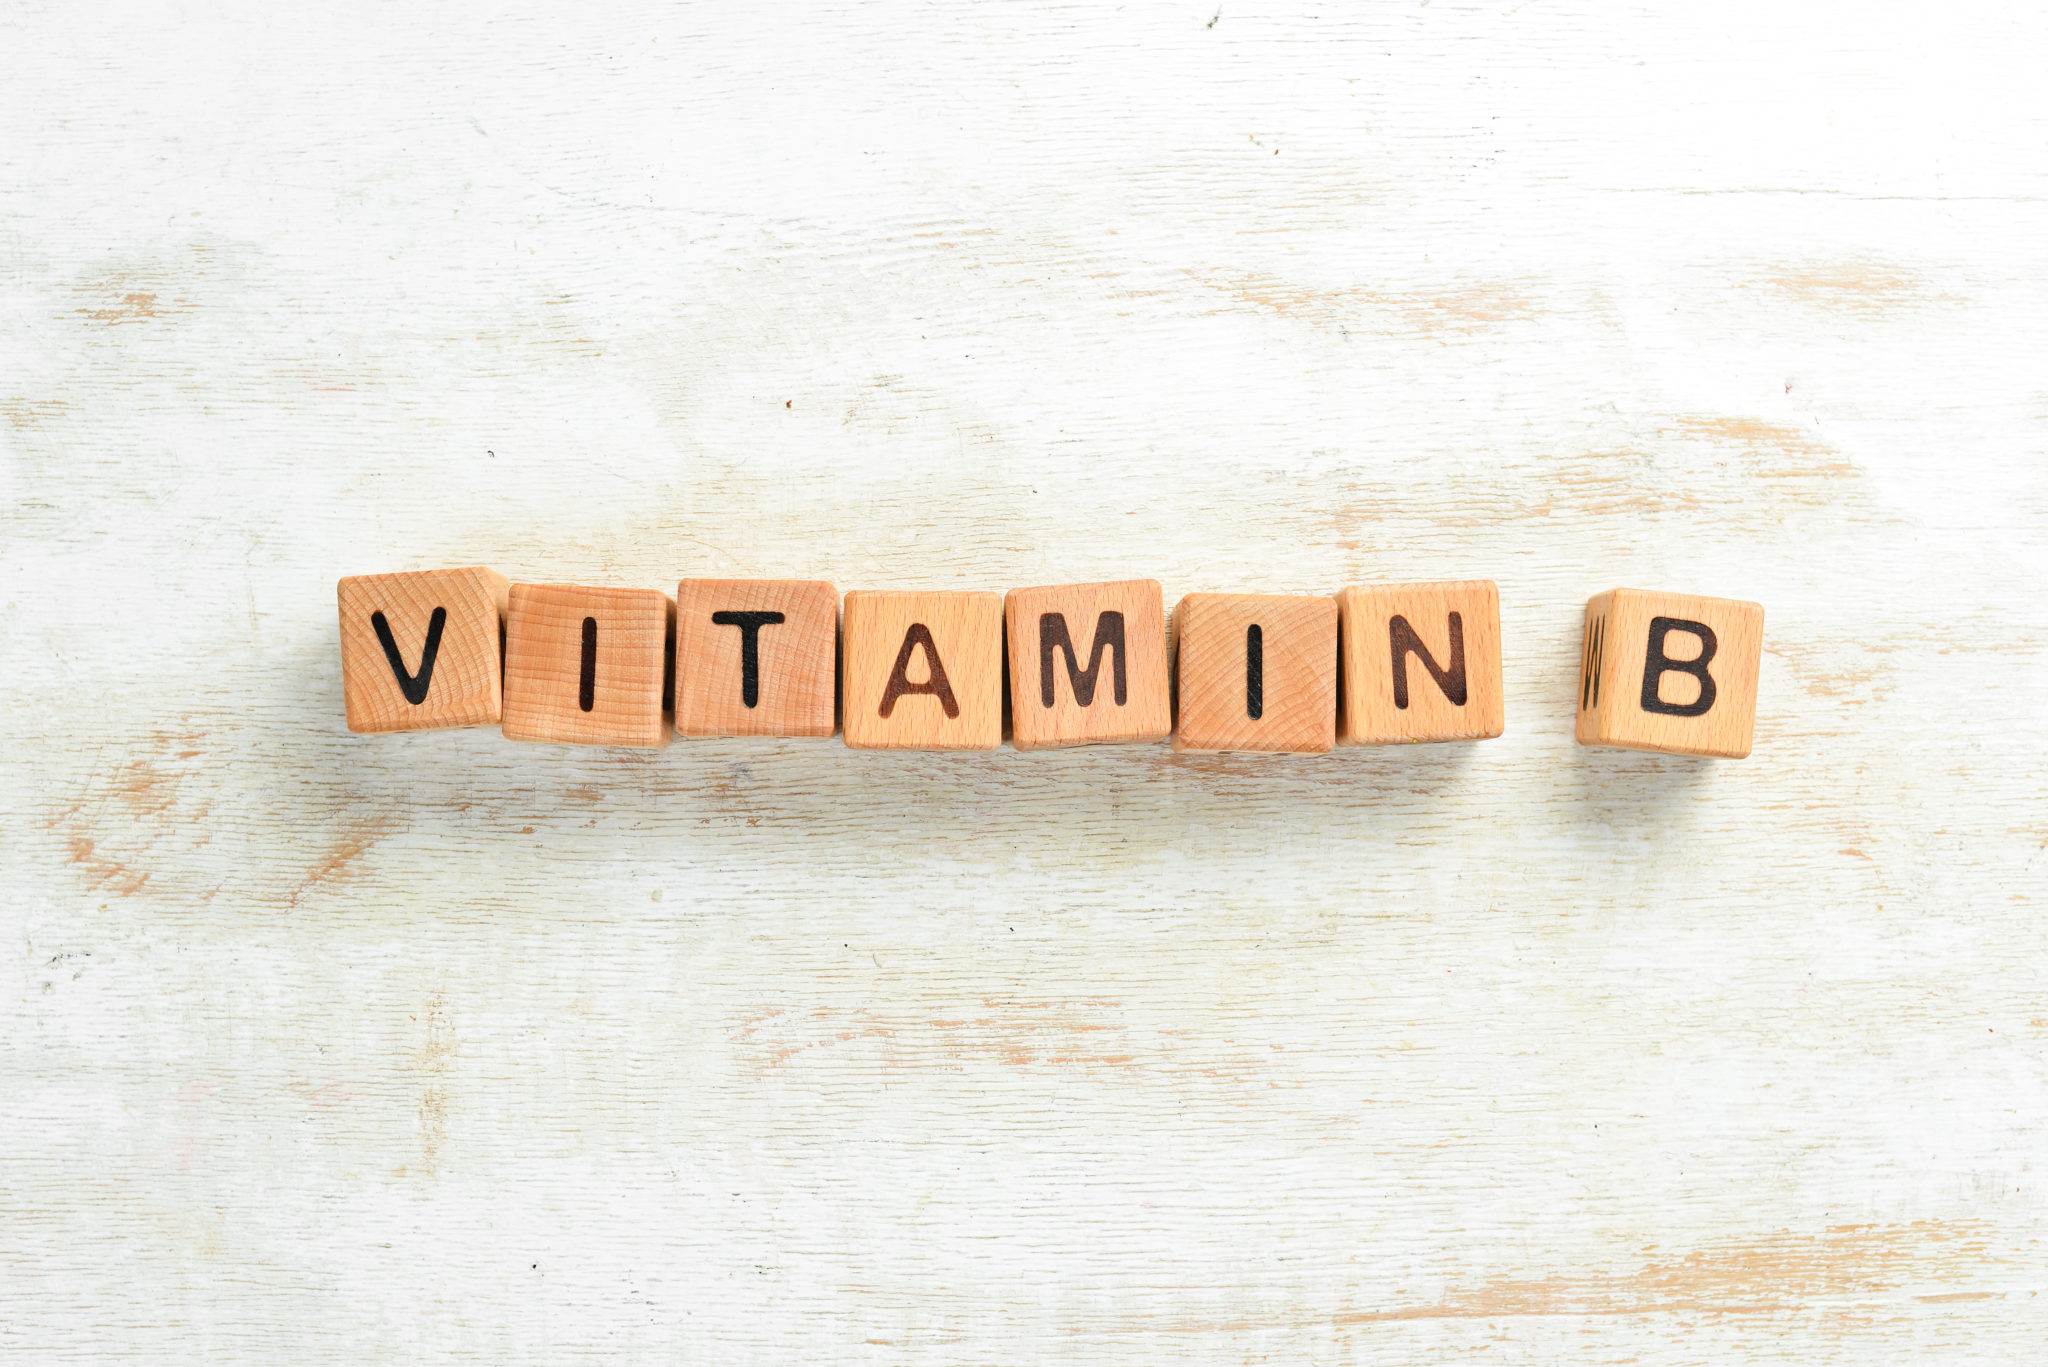 Dodejte životu energii - vyřešte nedostatek vitaminu B